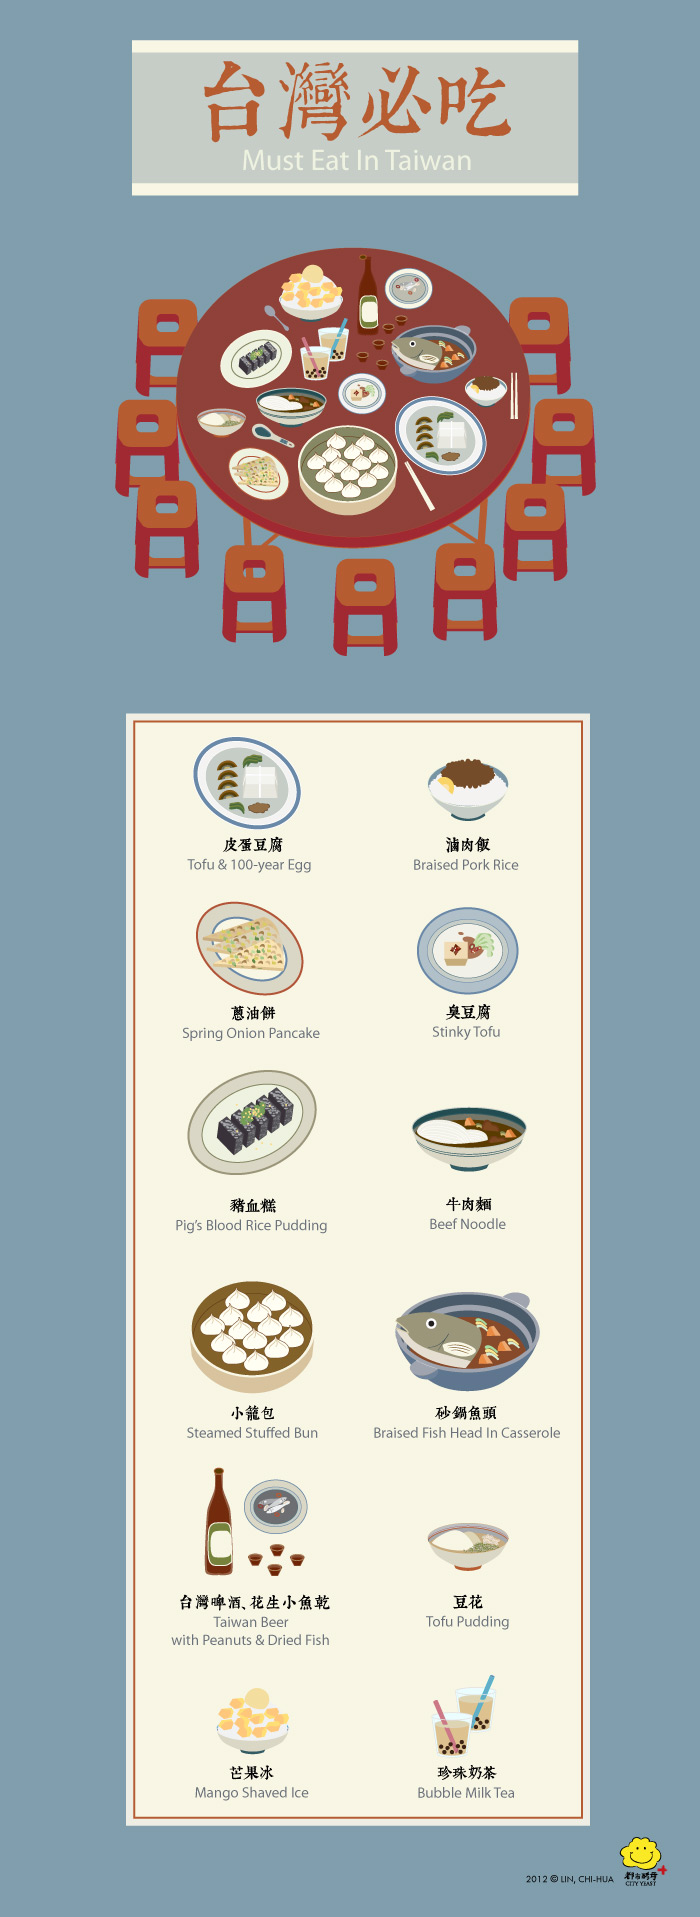 水越設計, 都市酵母, city yeast, AGUA Design, 臺灣, 臺北, taipei, food, 食物, 臺灣美食, infographic